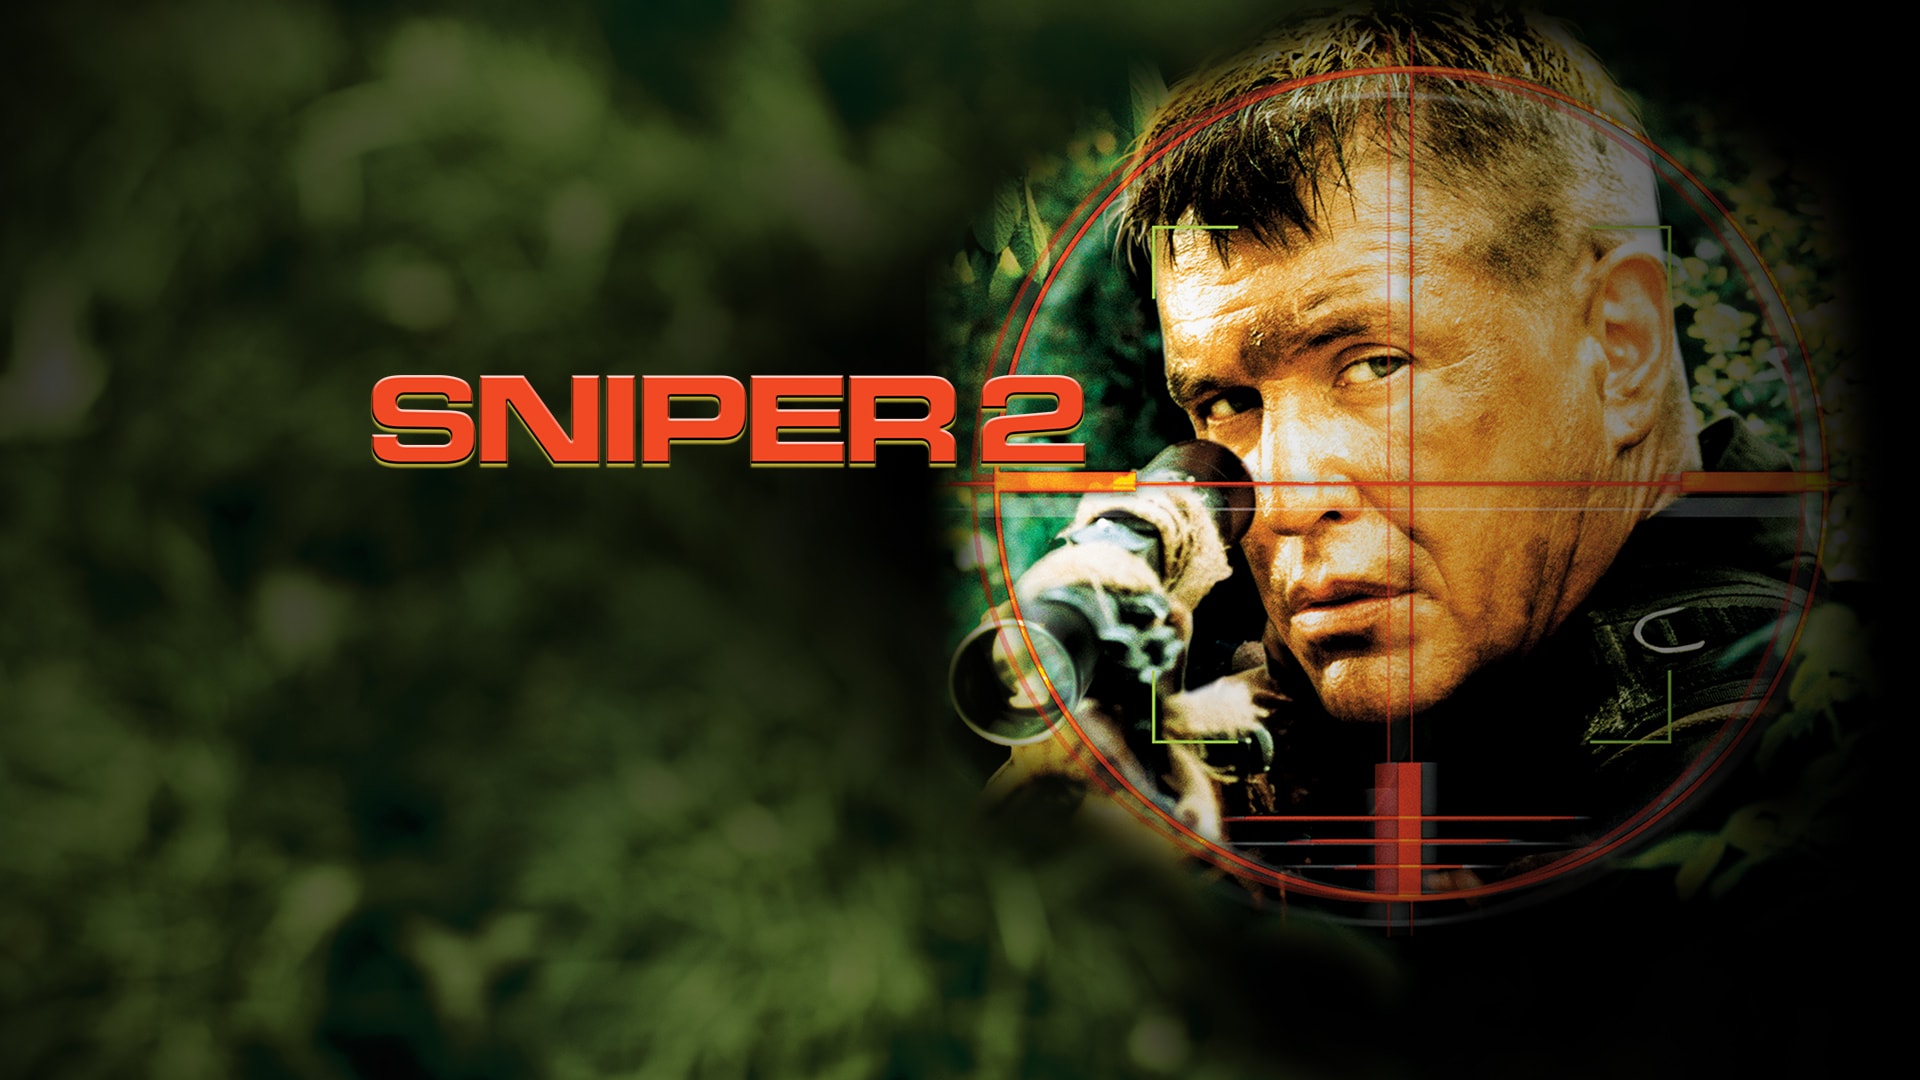 Watch Sniper 2 Online | Stream Full Movies